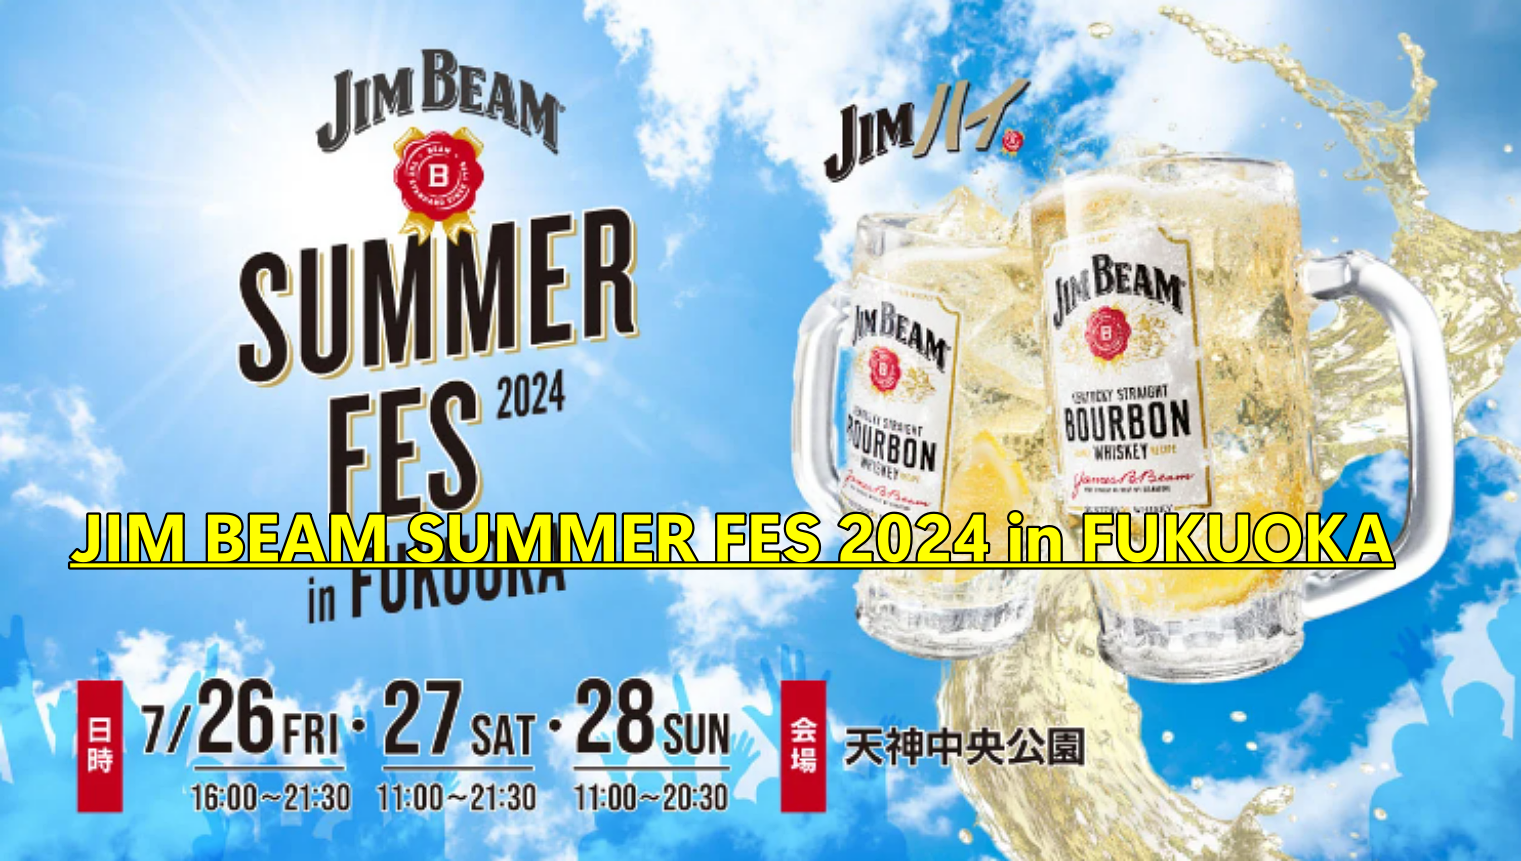 JIM BEAM SUMMER FES 2024 in FUKUOKA